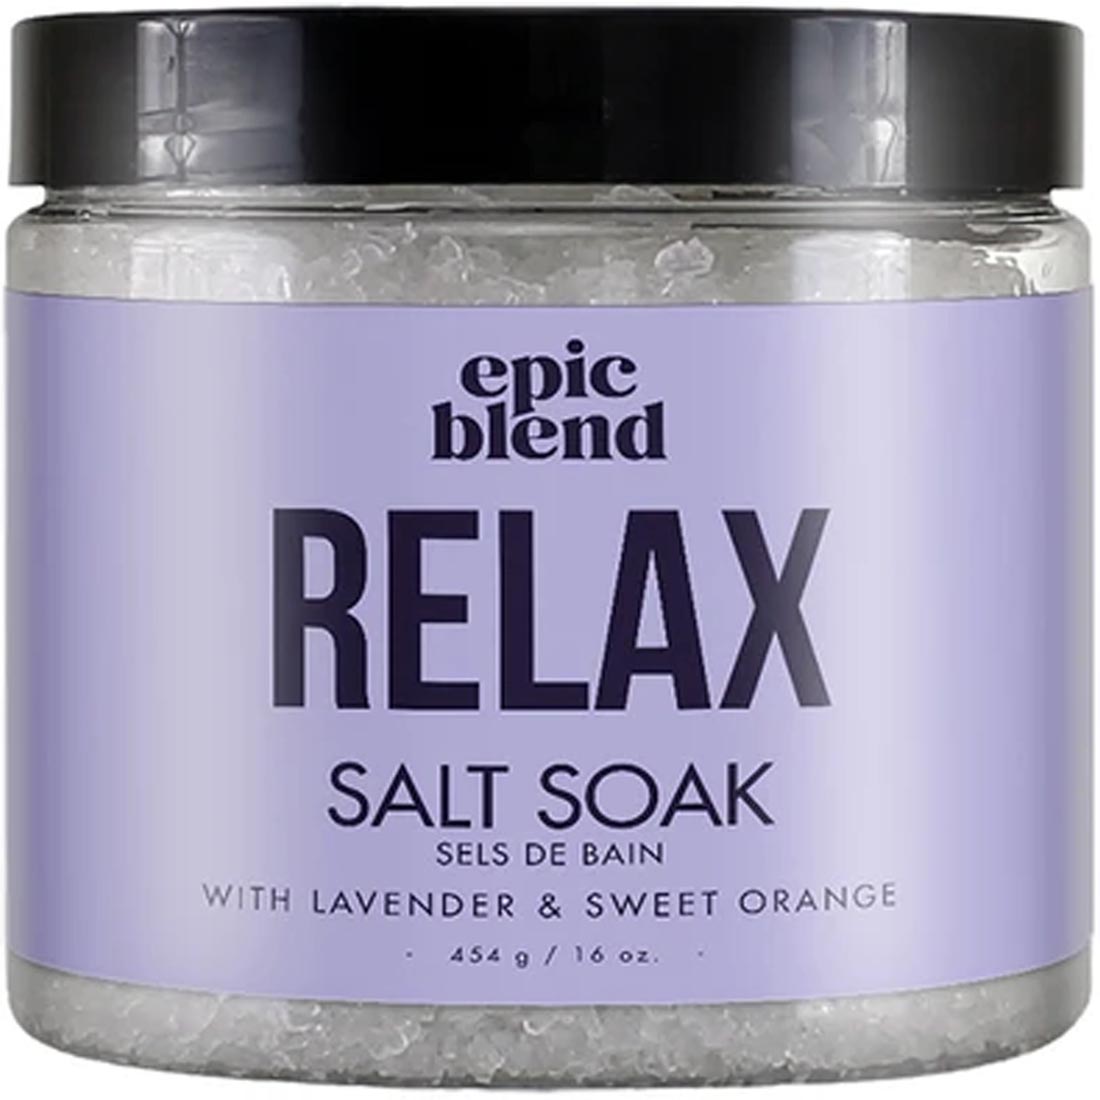 Epic Blend Bath Salt Soak, Clearance 65% Off, Final Sale